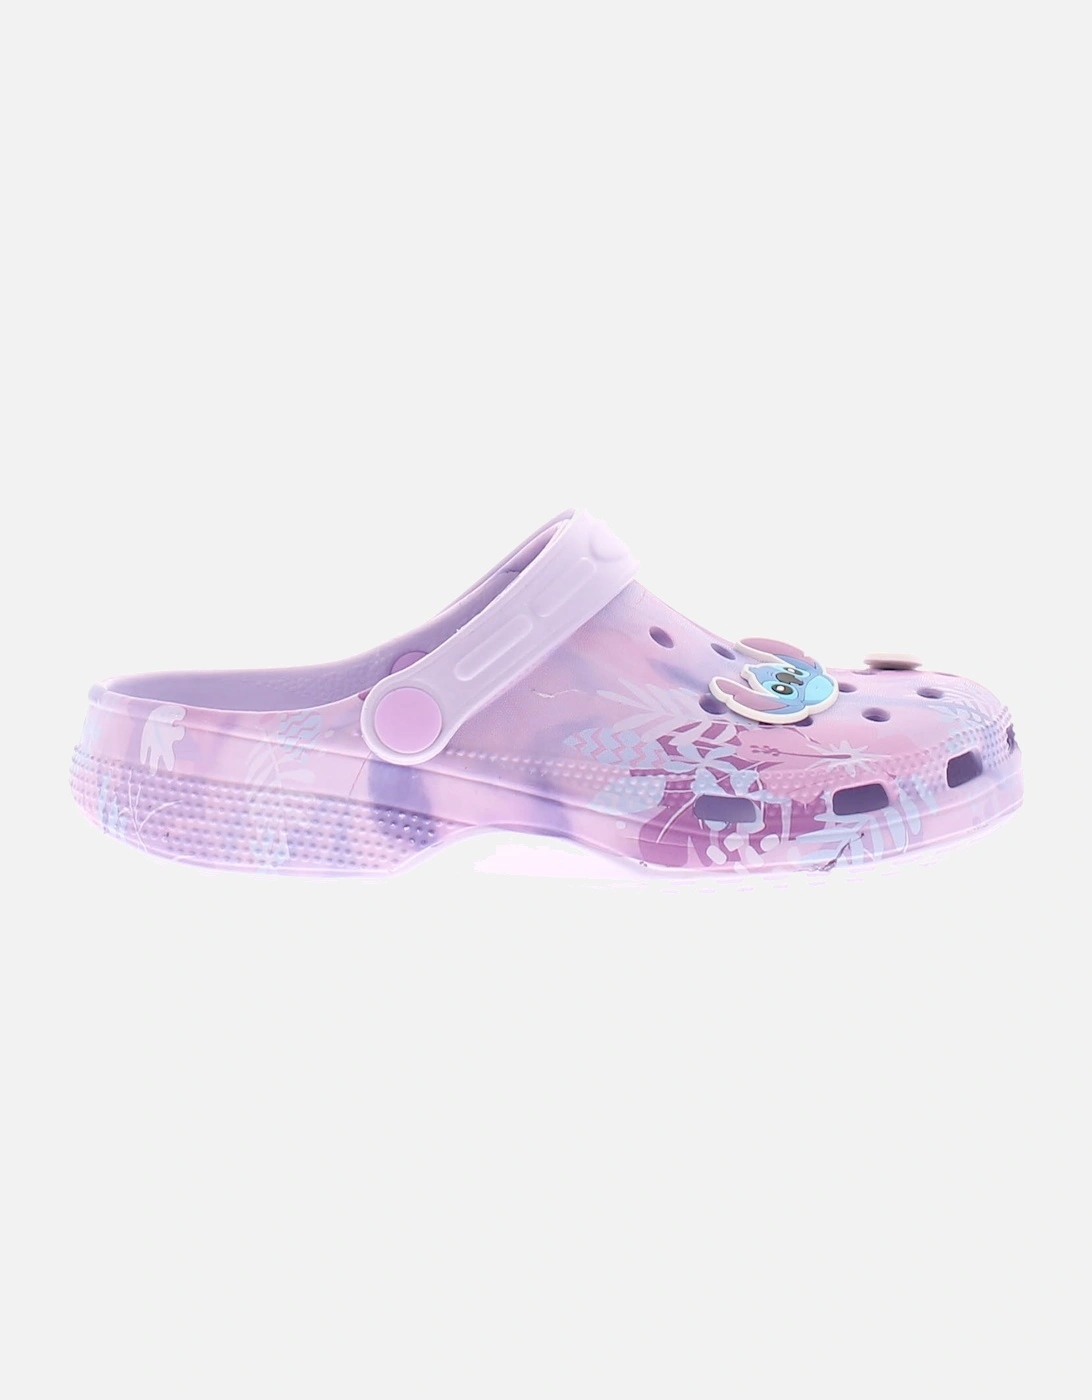 Younger Girls Sandals Sliders Clog purple UK Size